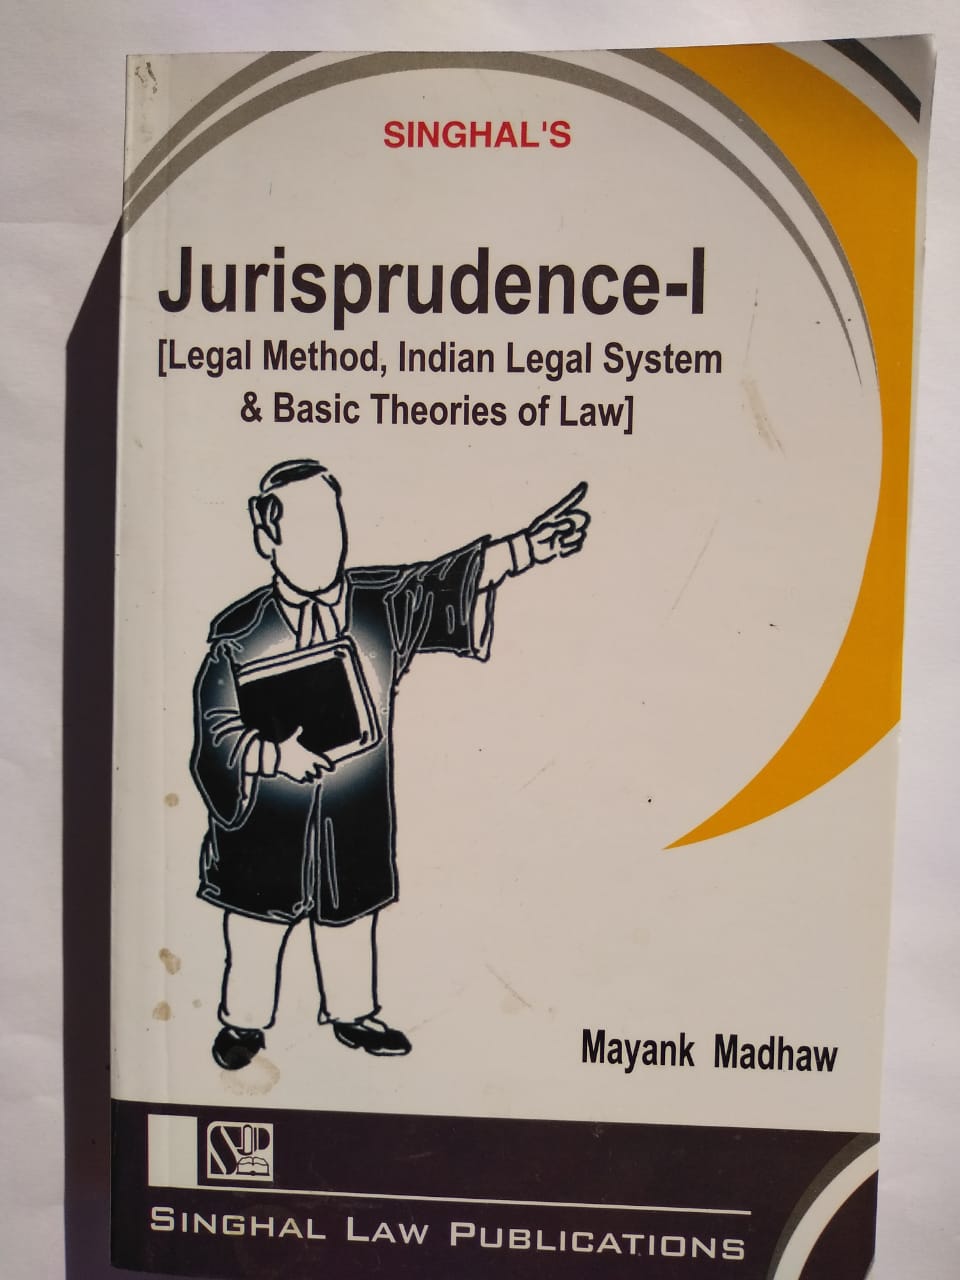 Singhal's Jurisprudence-1